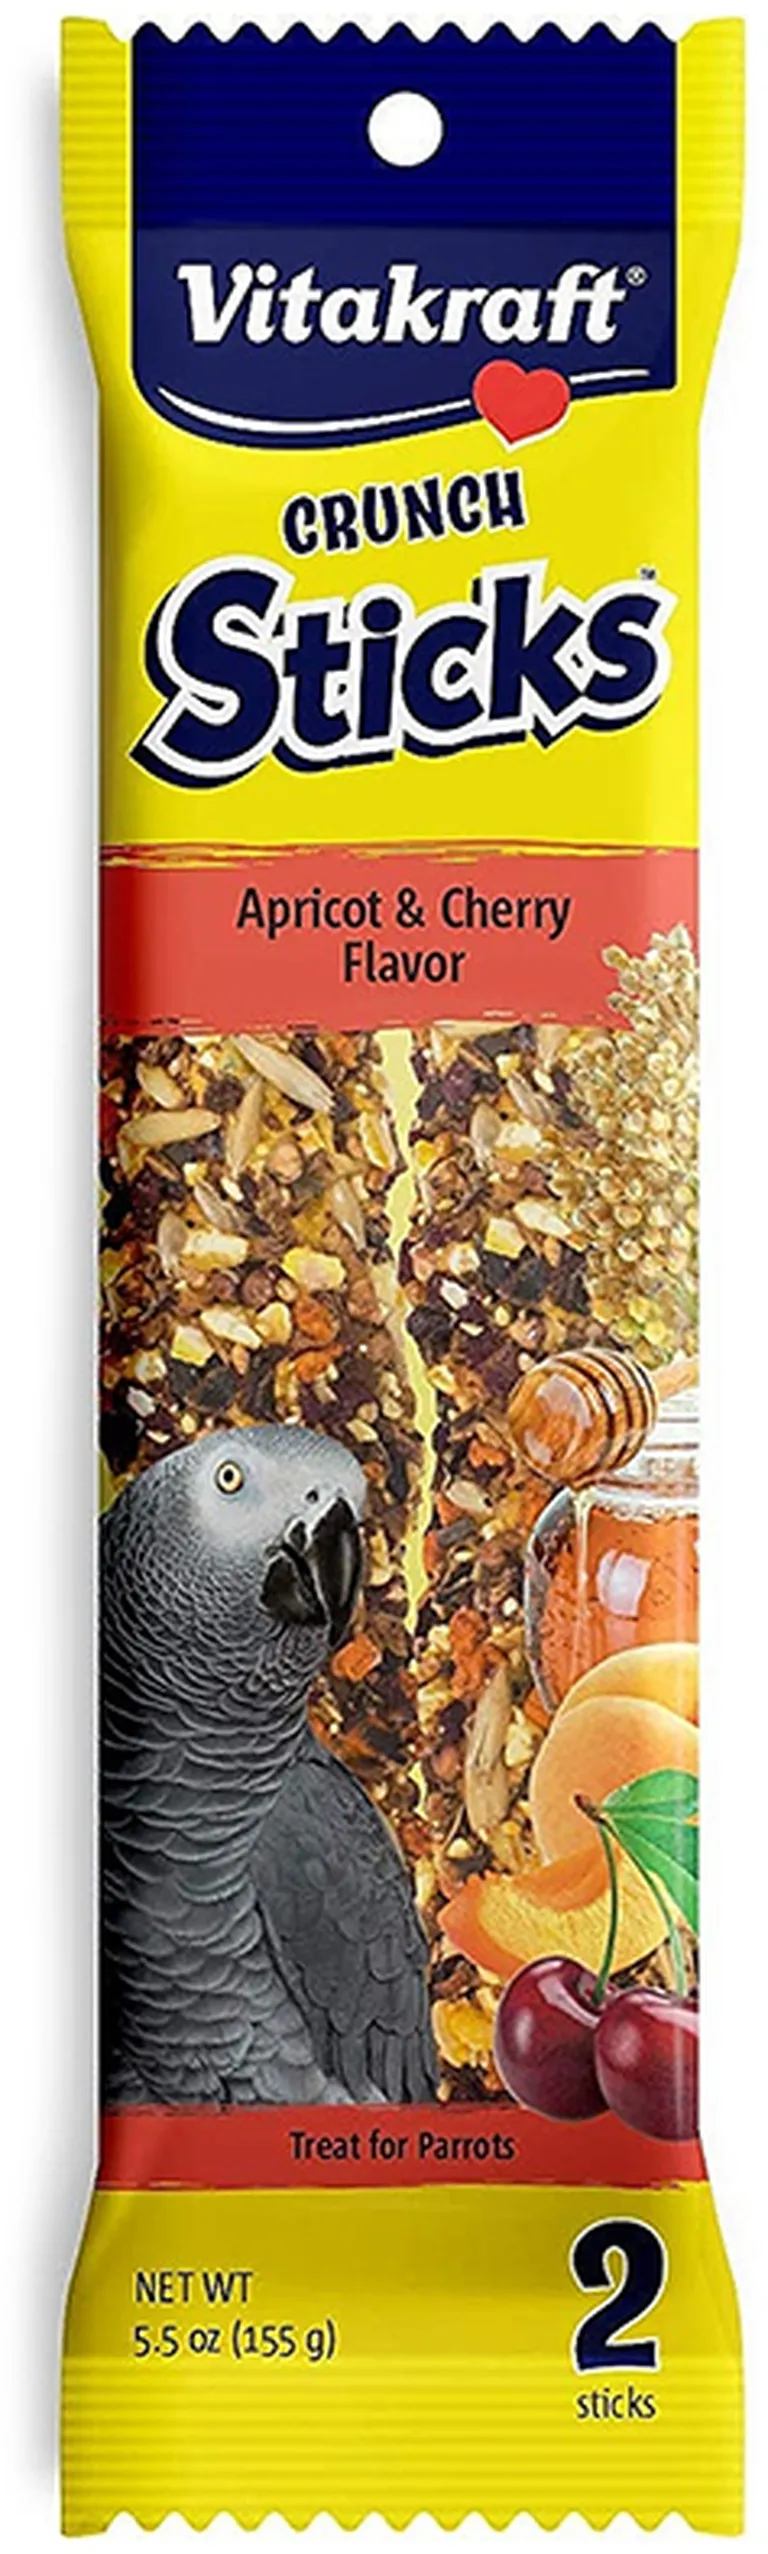 Vitakraft Crunch Sticks Apricot & Cherry Parrot Treats Photo 1